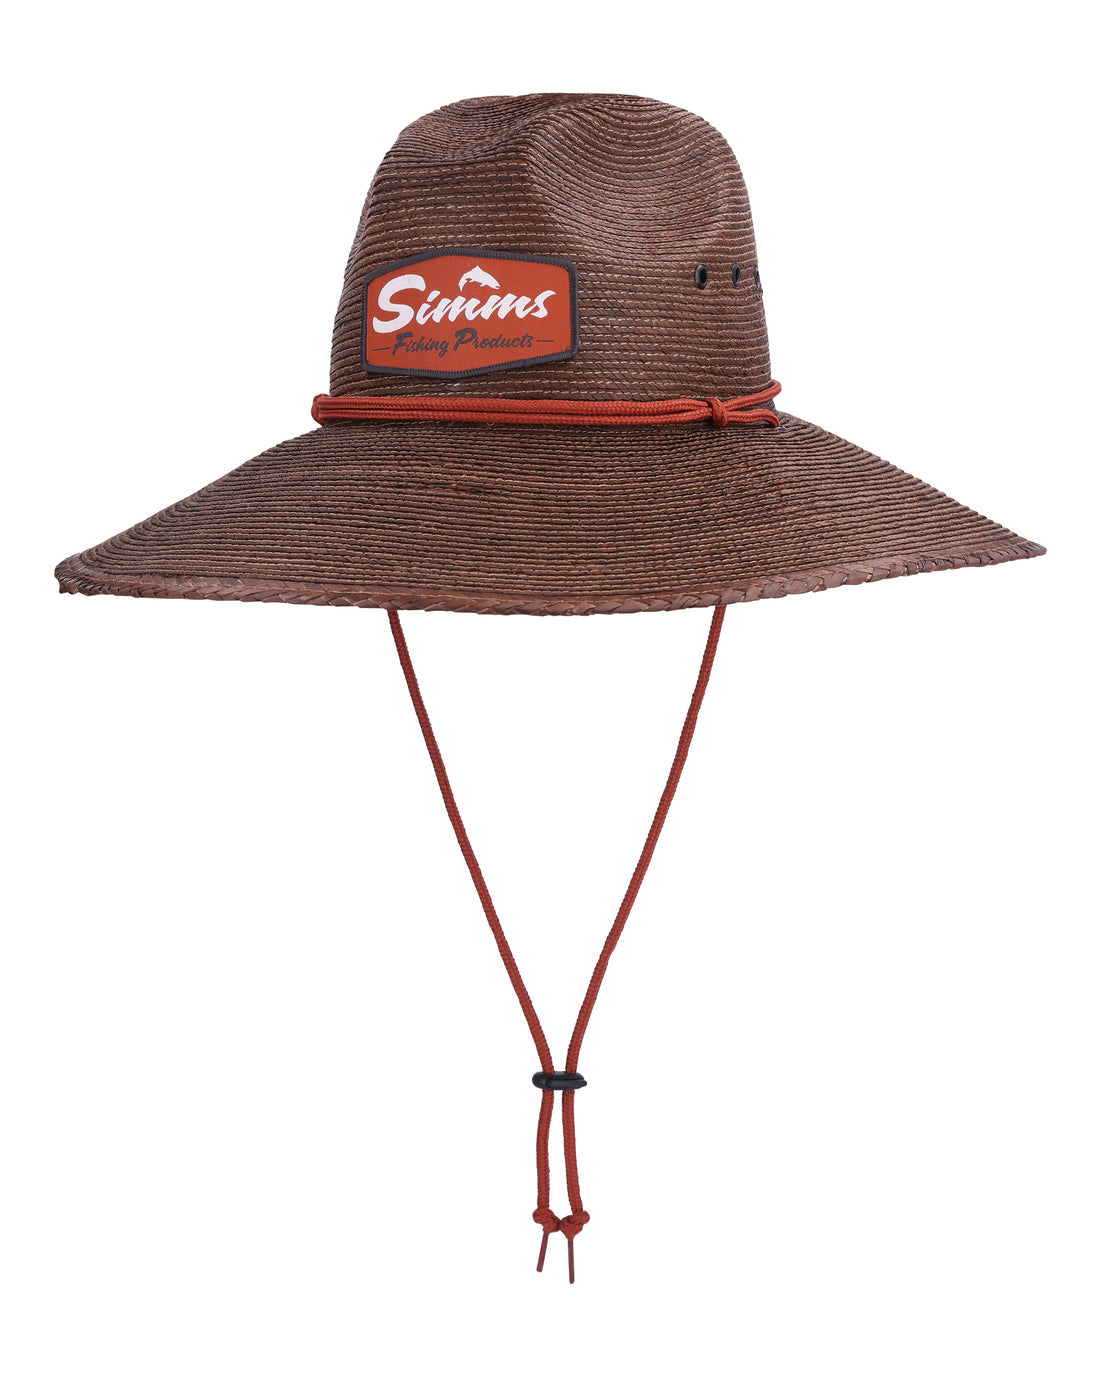 Hats & Sungaiters - Motor City Anglers